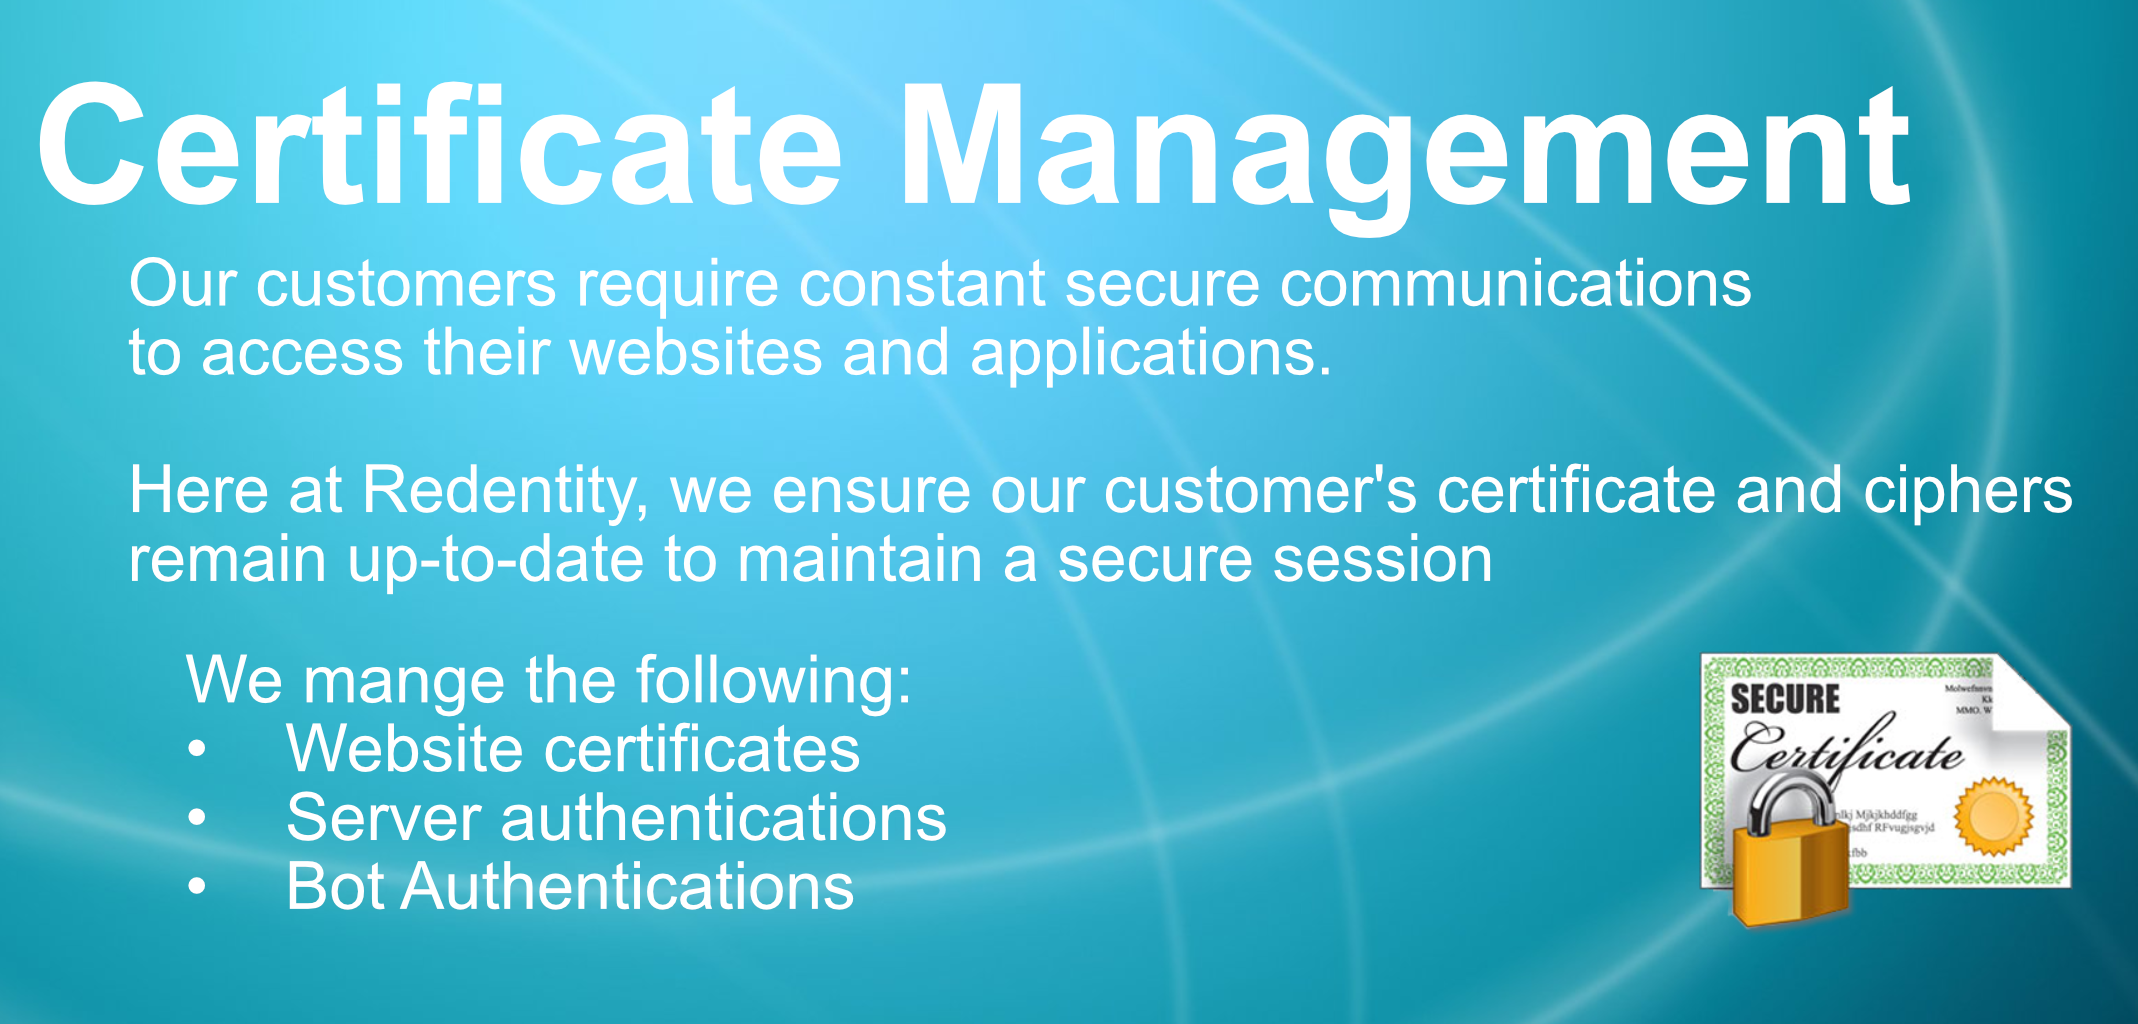 TLS Certificate Management